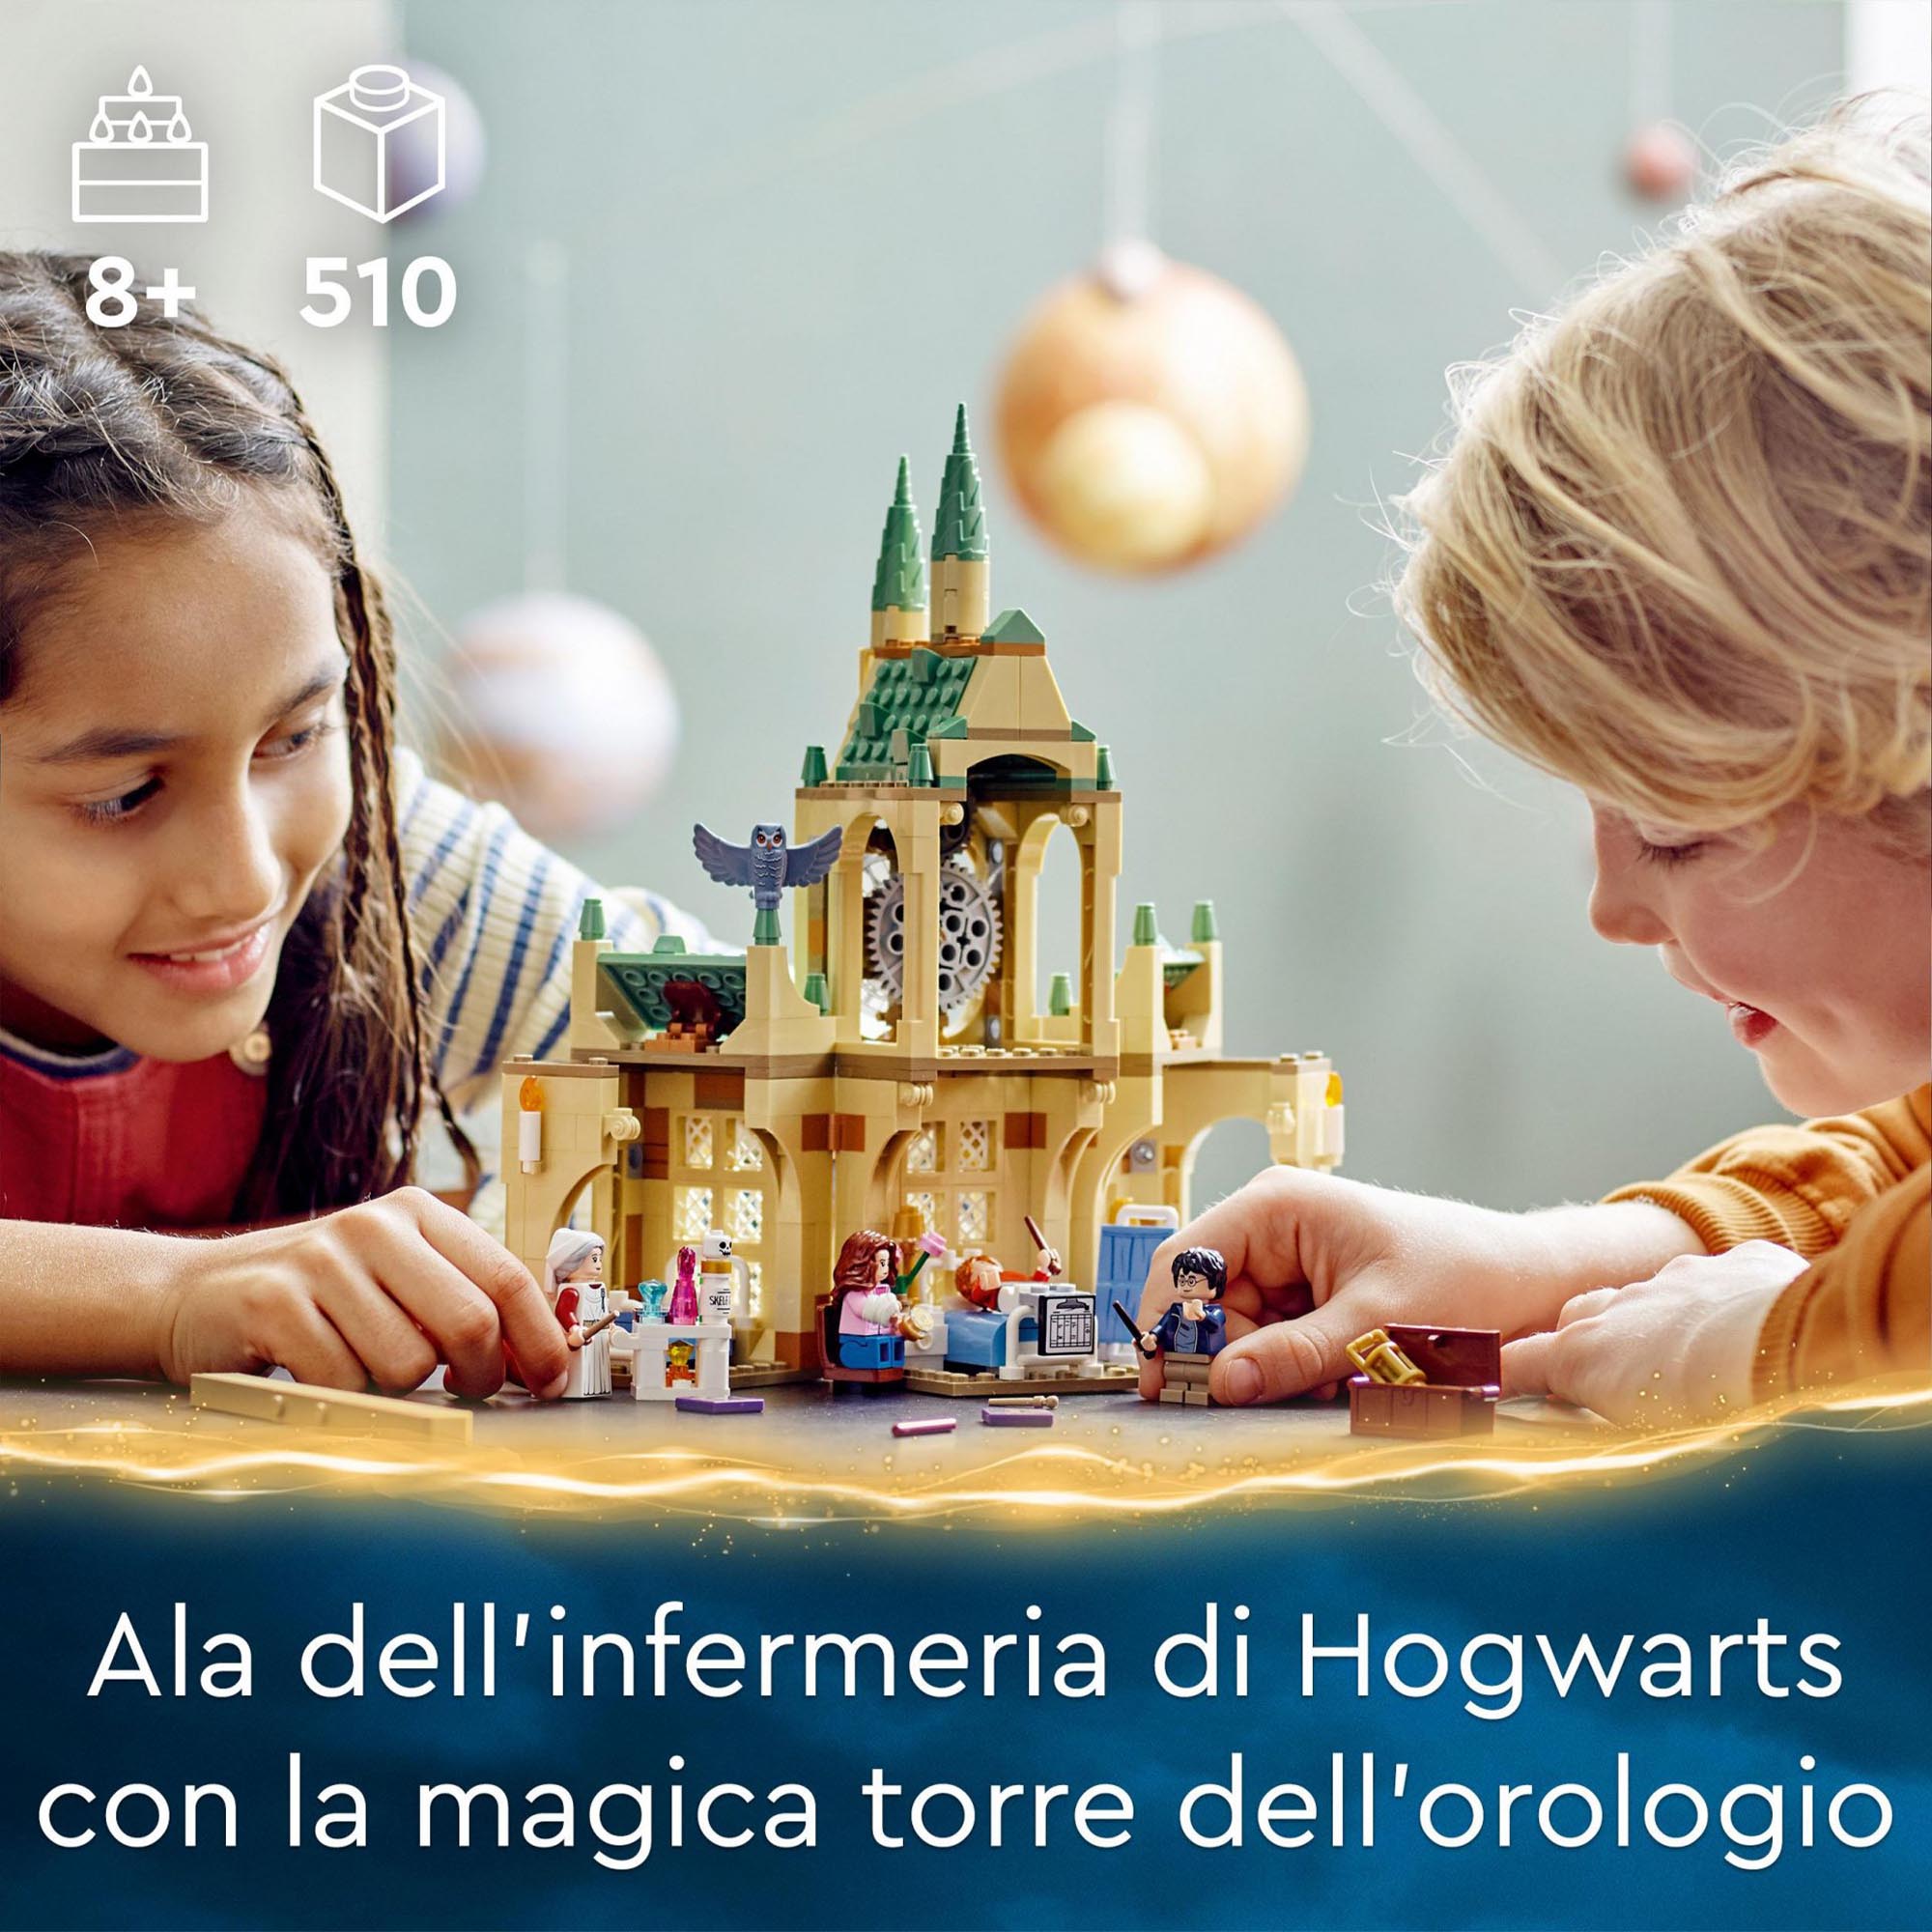 LEGO Harry Potter Ala dell'infermeria di Hogwarts, con Minifigure Ron Weasley,  76398, , large